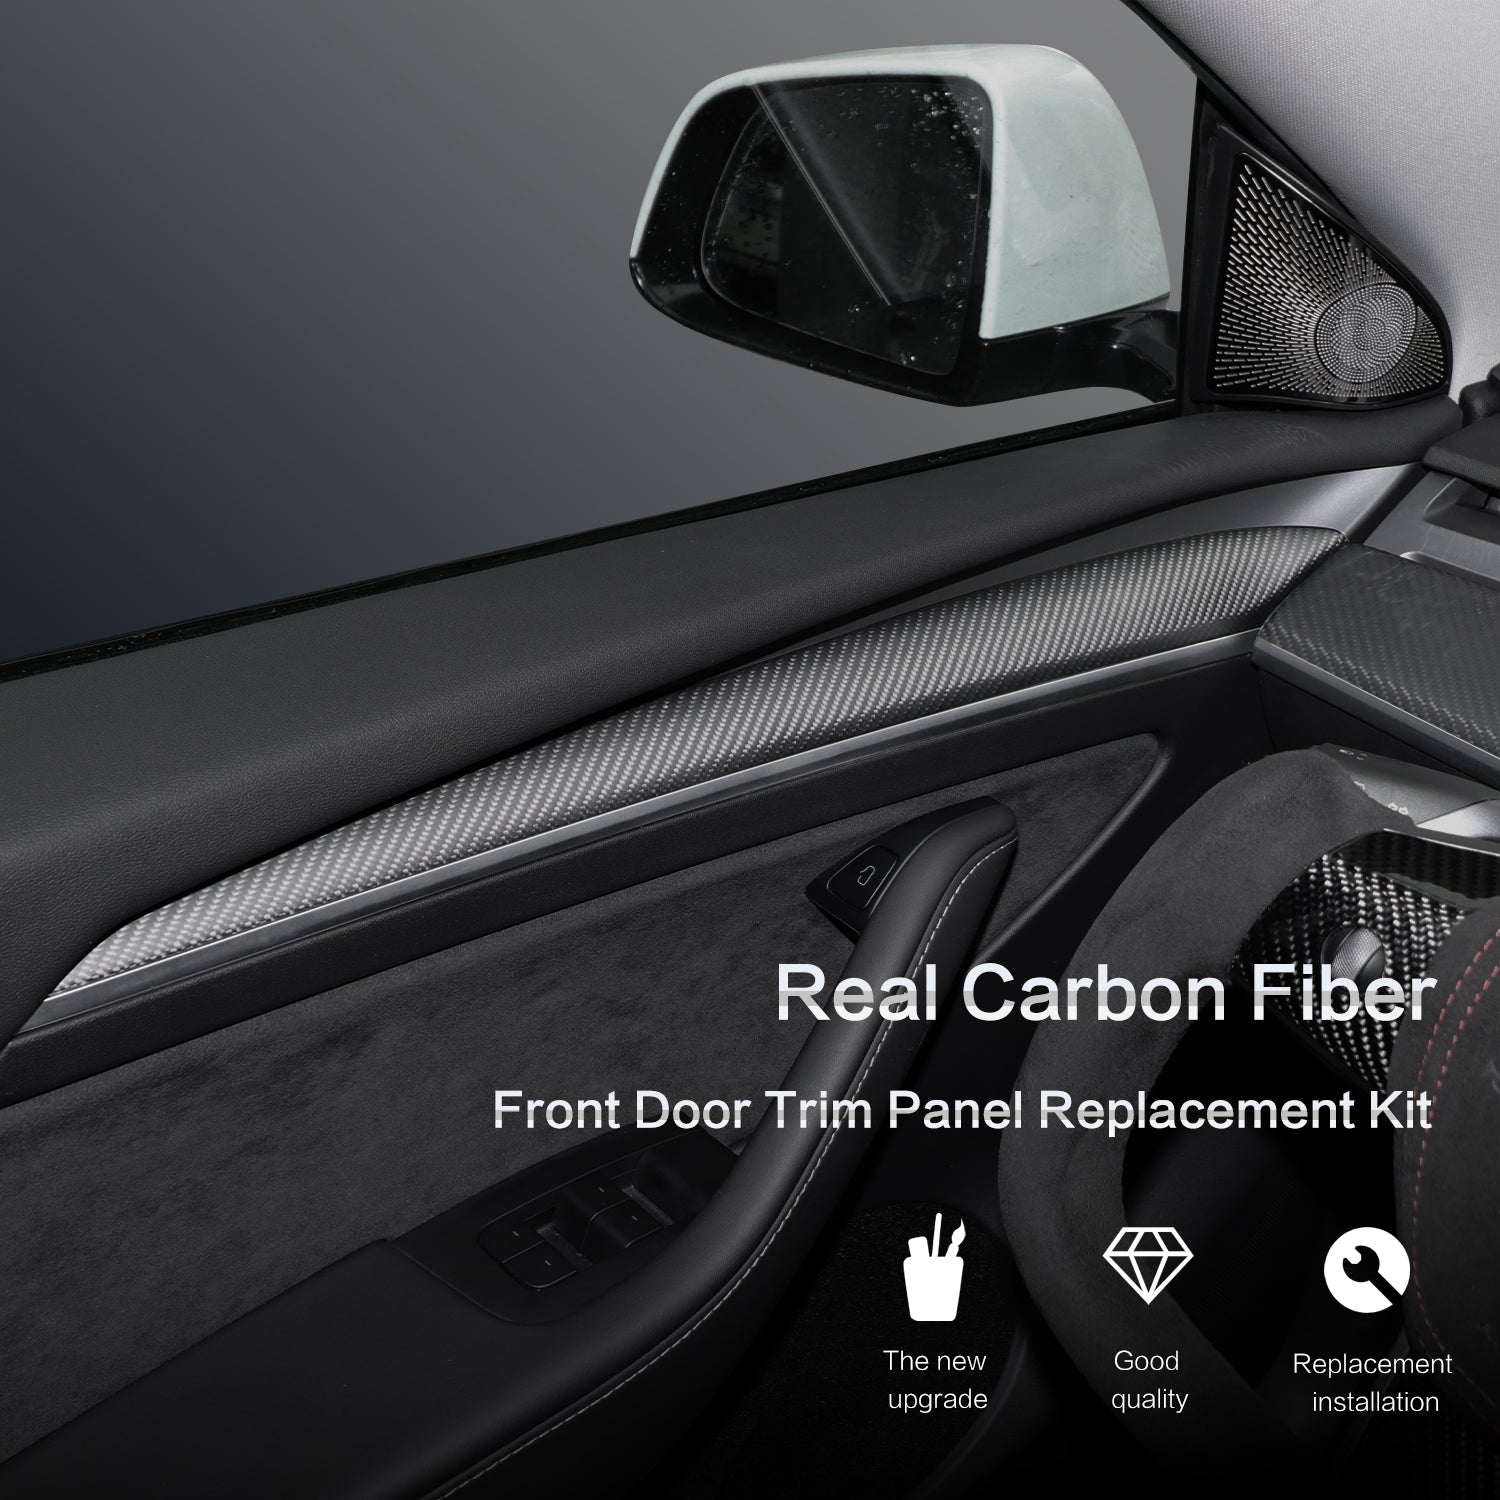 Matte real carbon fiber left door trim panel replacement kit